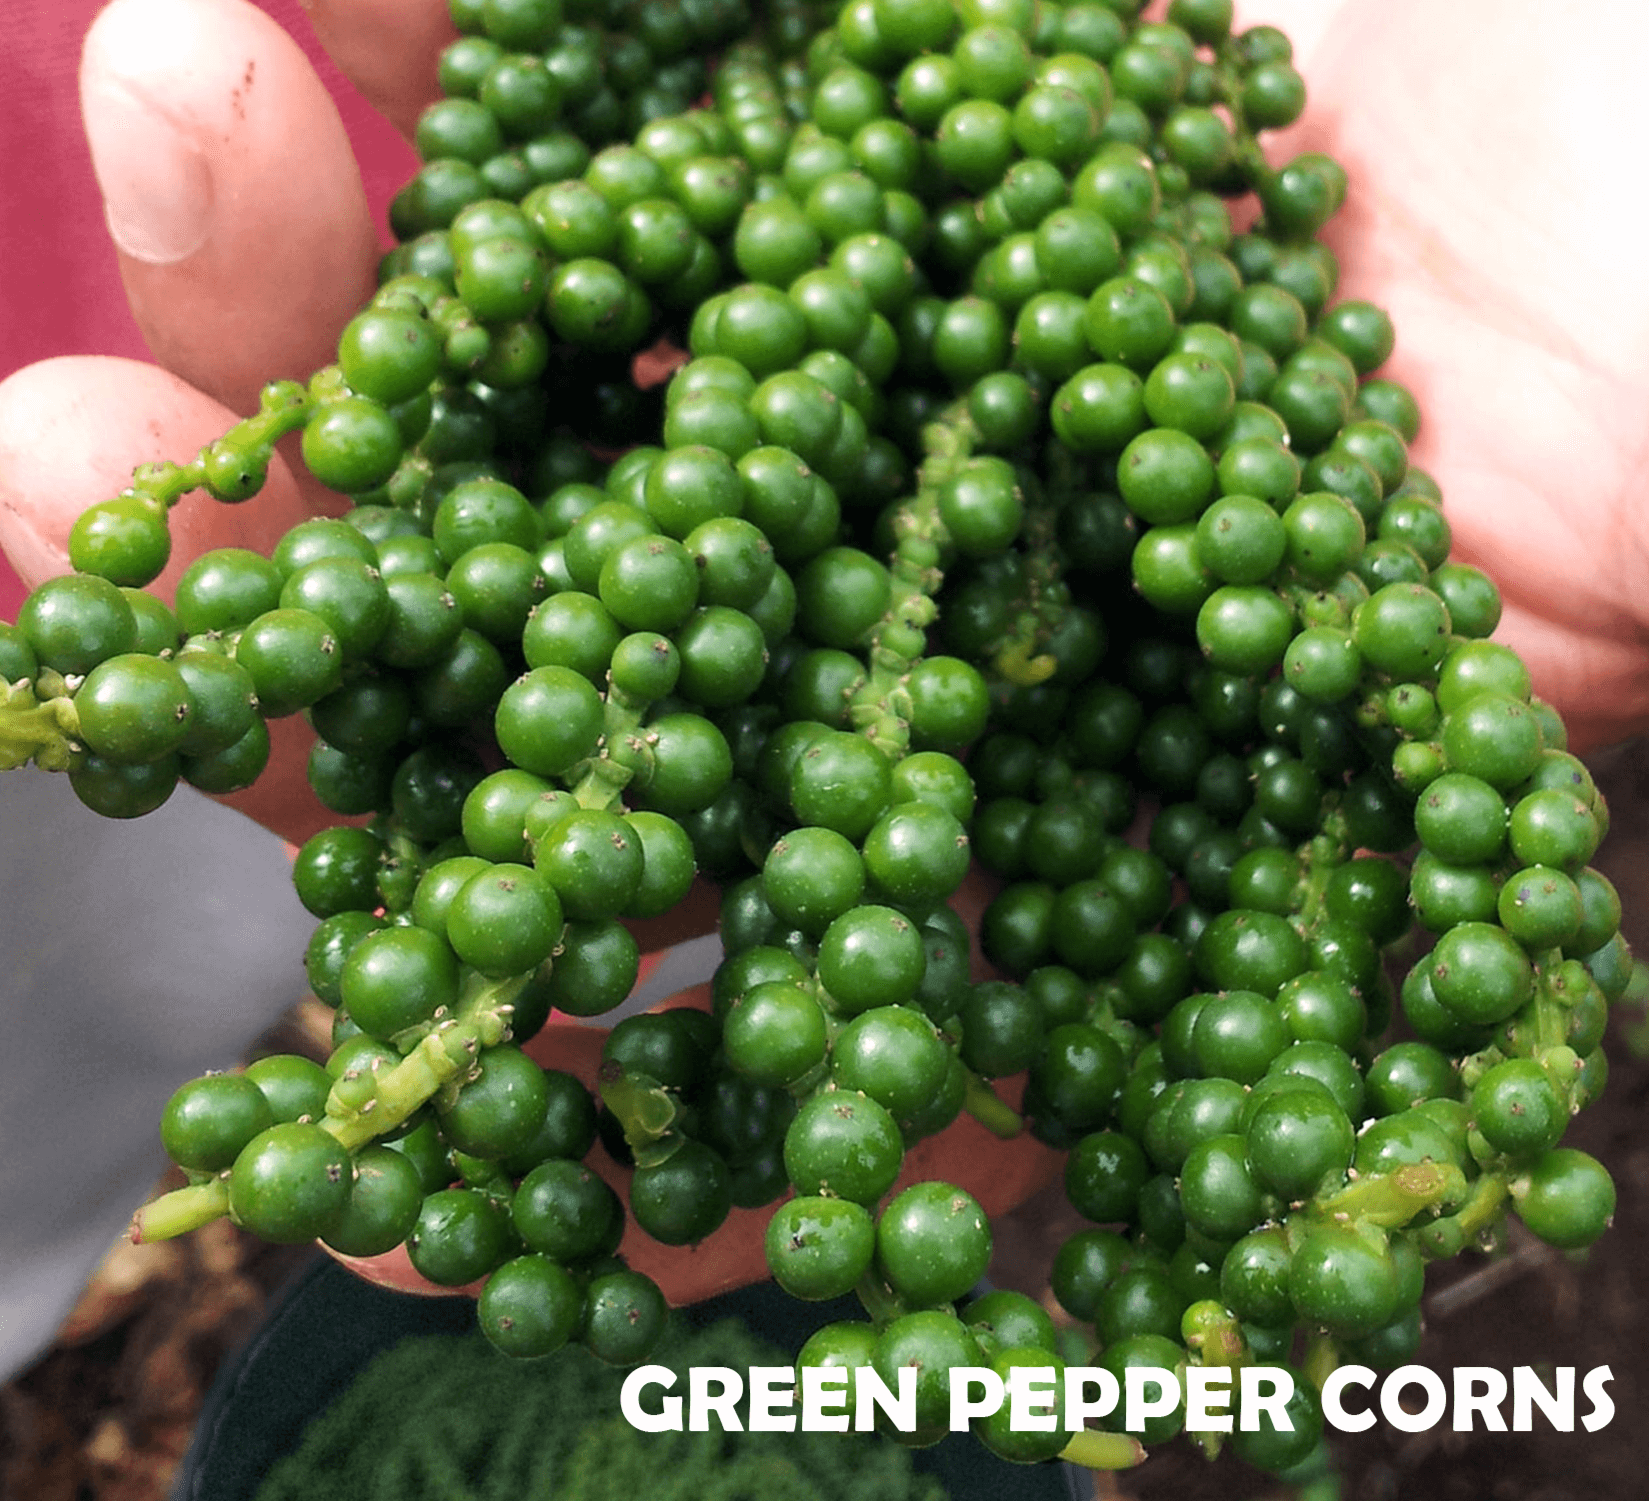 Green pepper corns